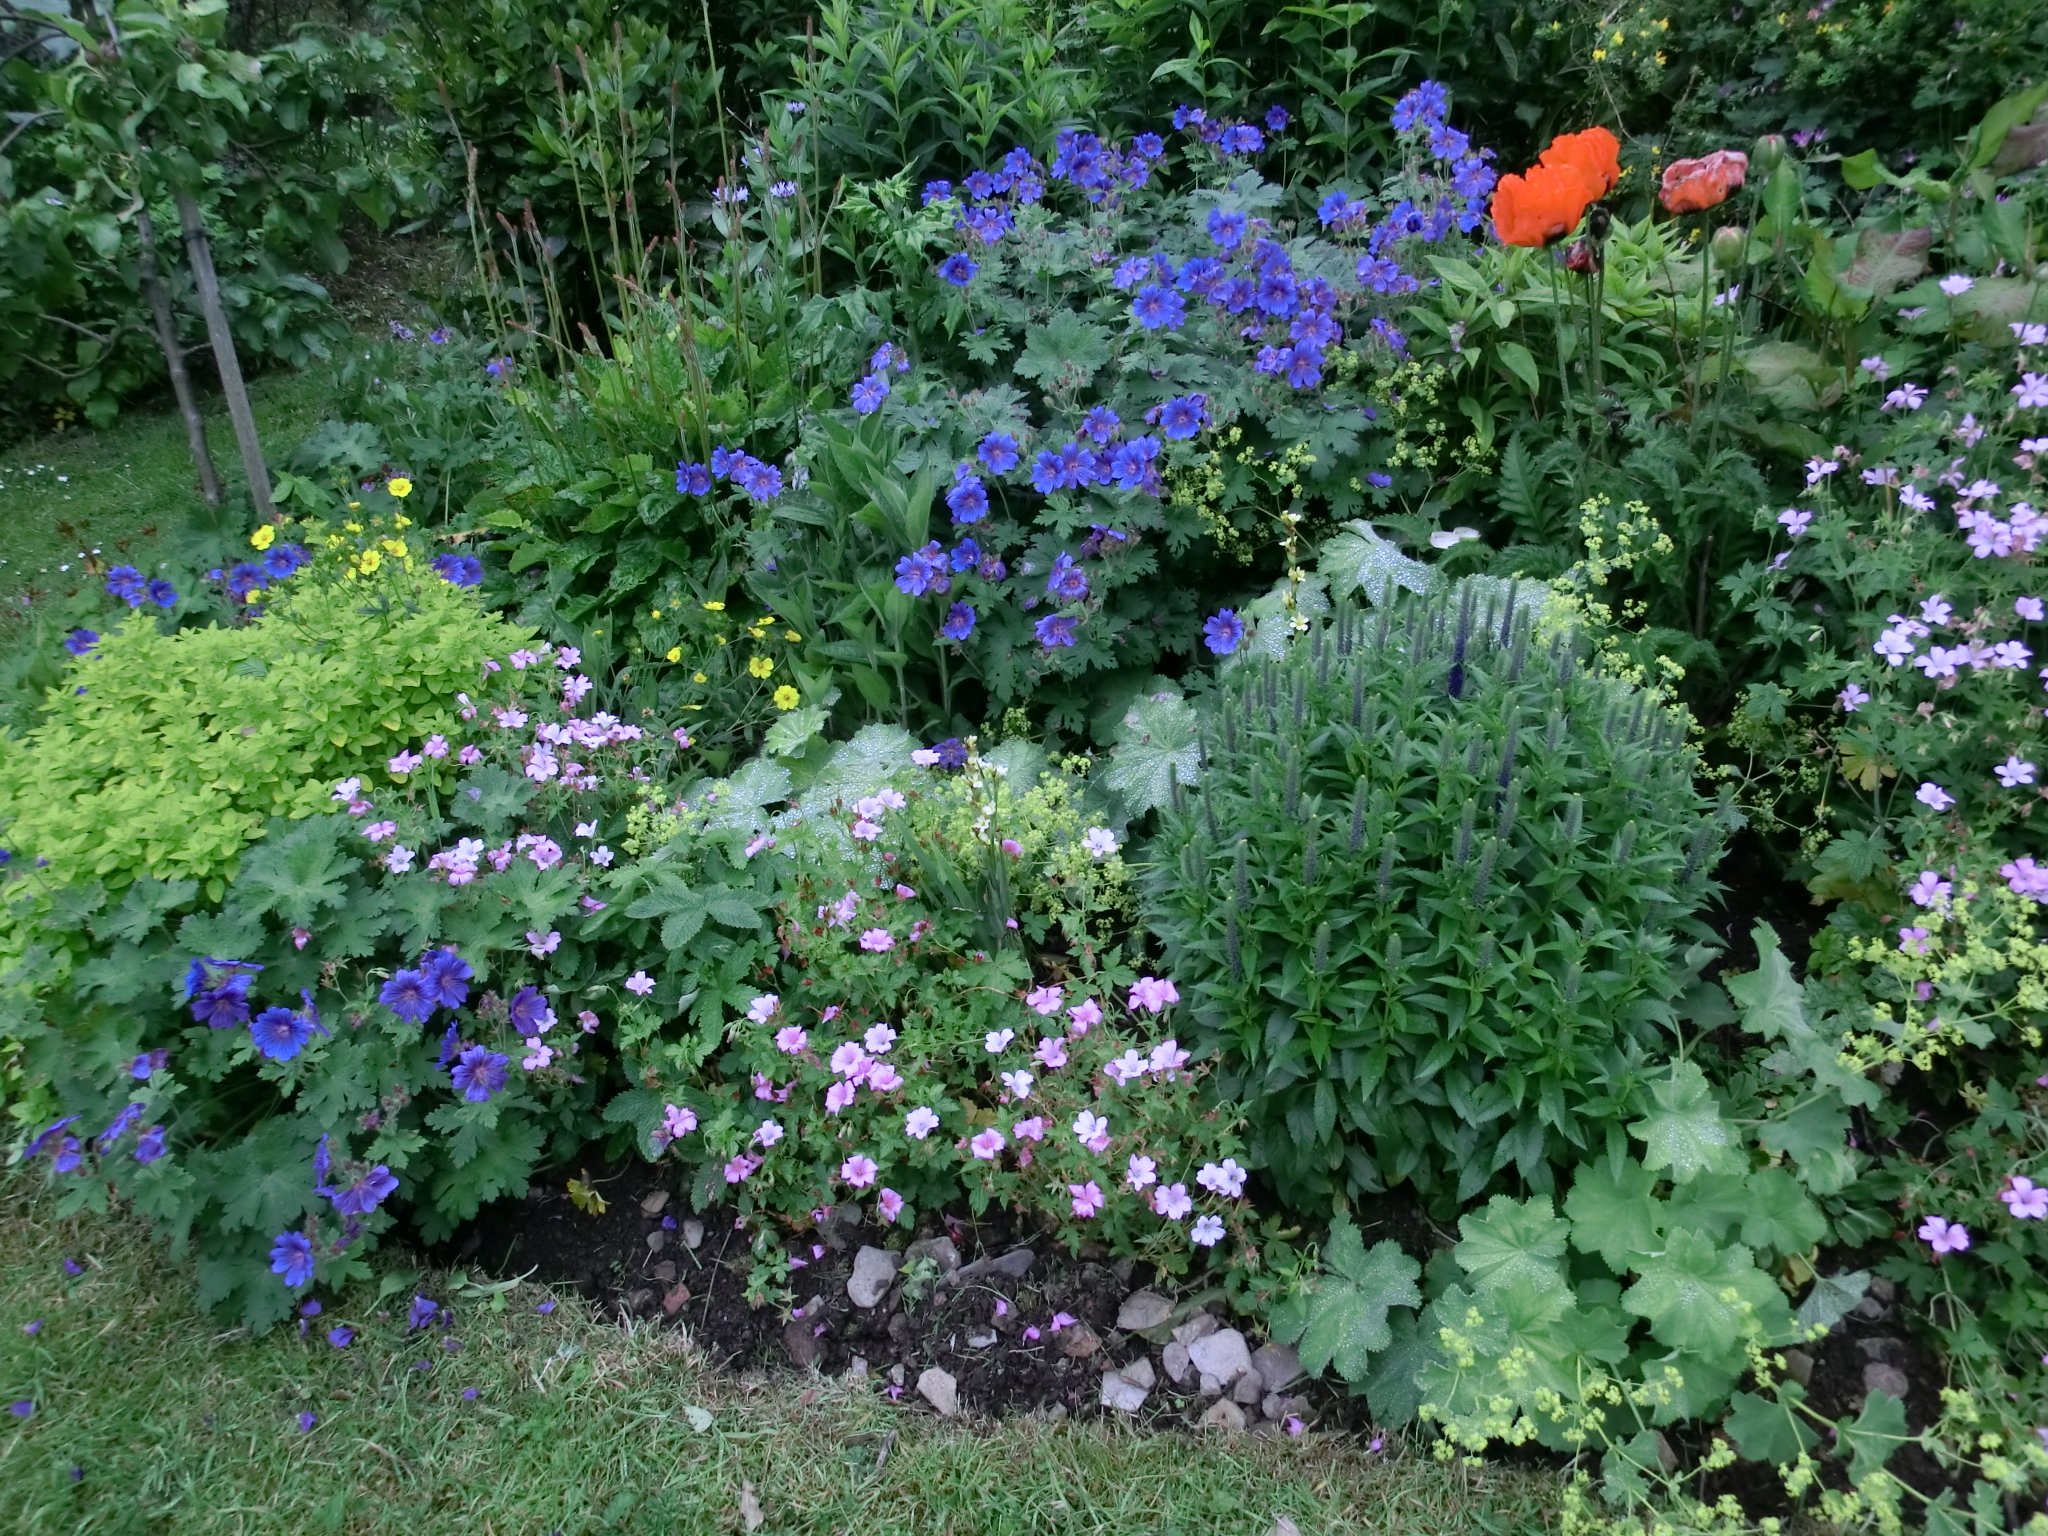 Hardy geraniums – stars of summer gardens